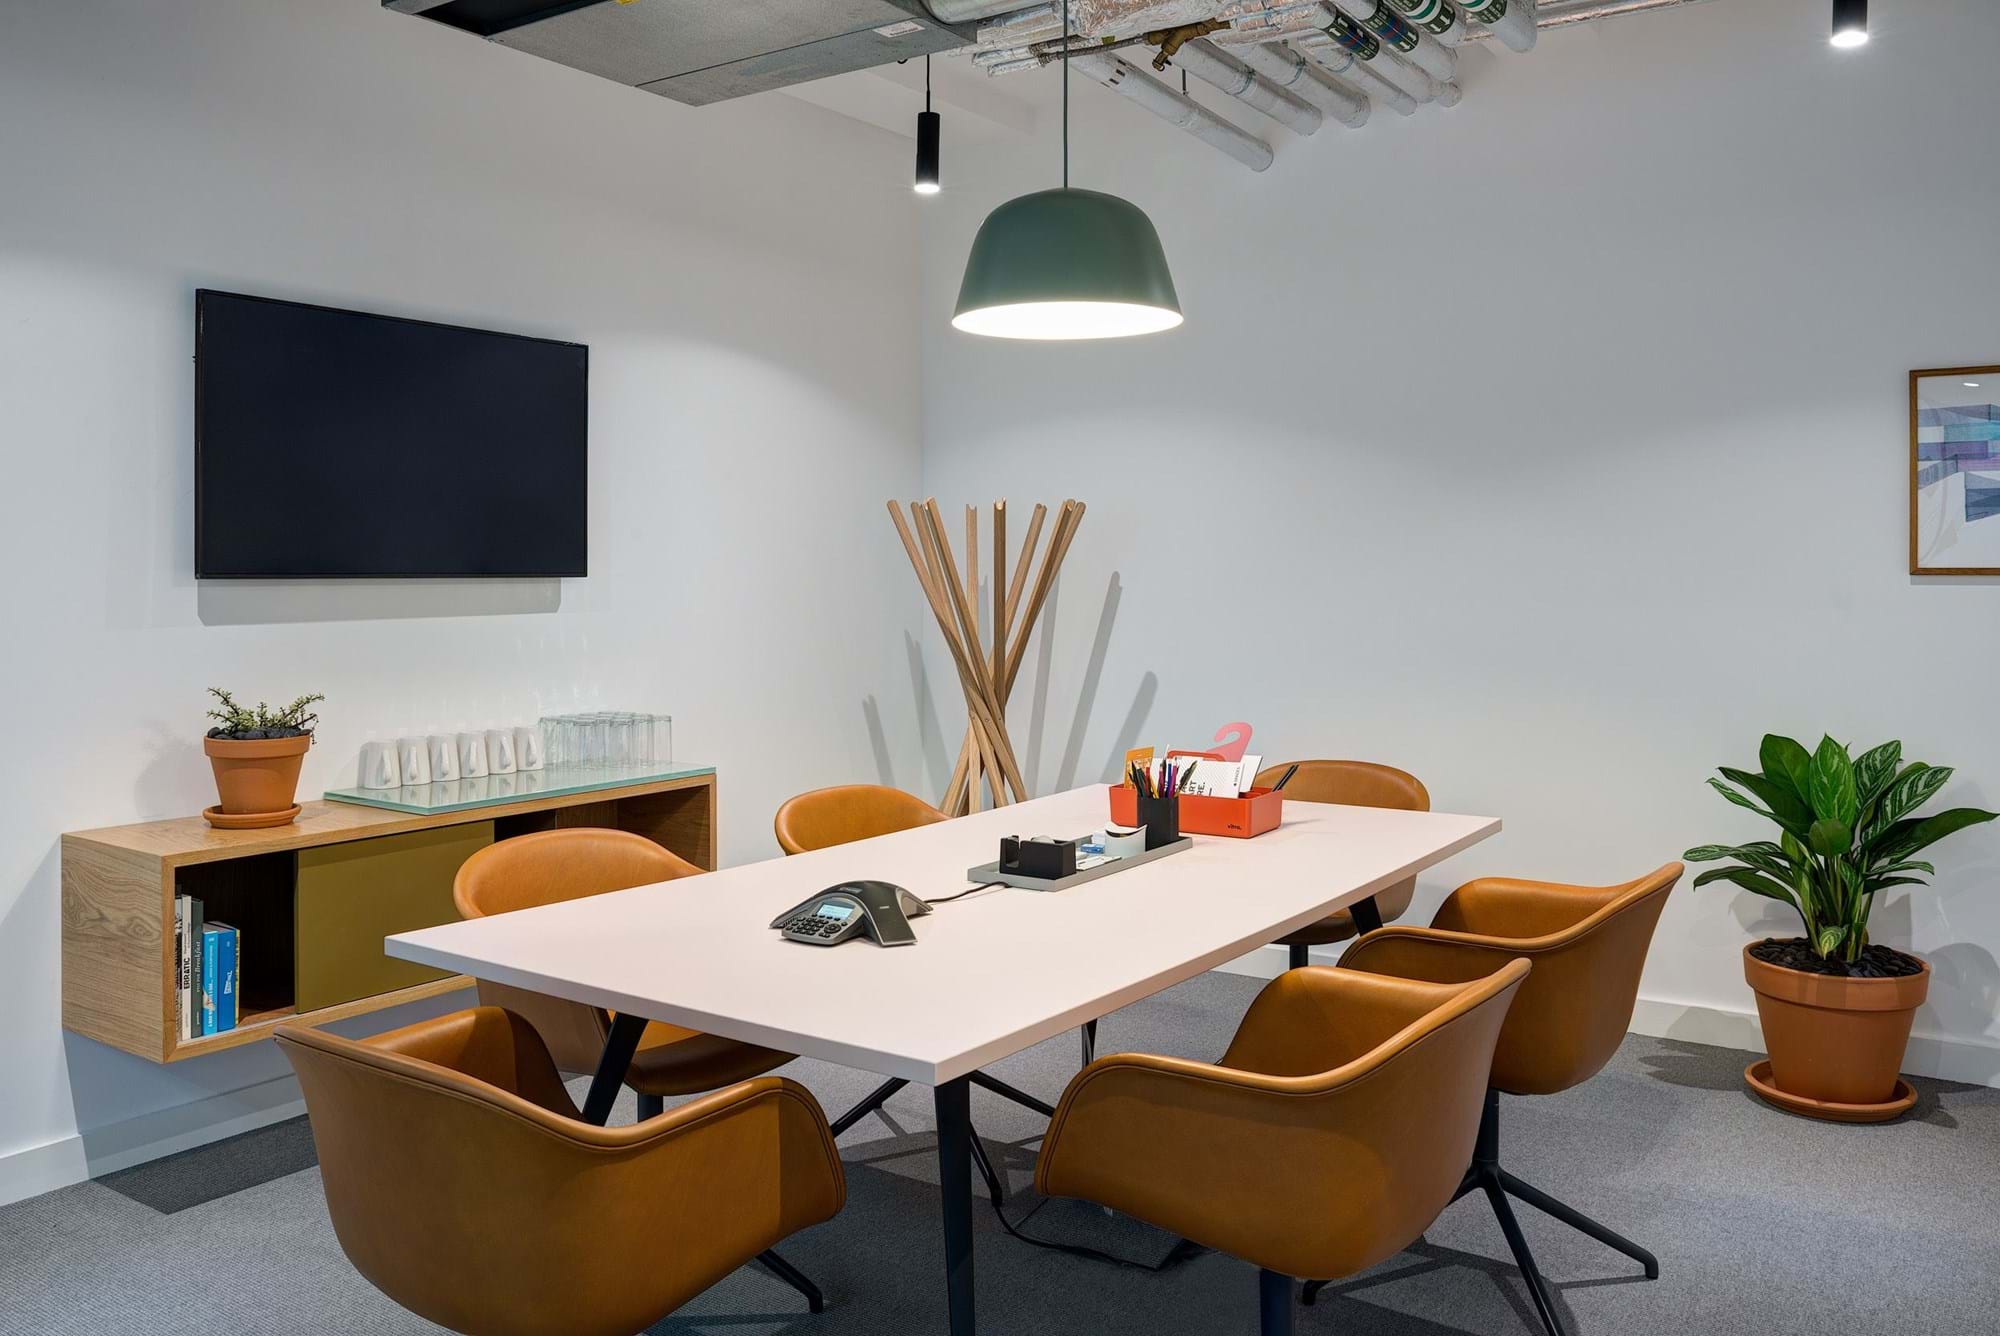 Modus Workspace office design, fit out and refurbishment - Regus spaces Epworth - Spaces Epworth 27 highres sRGB.jpg